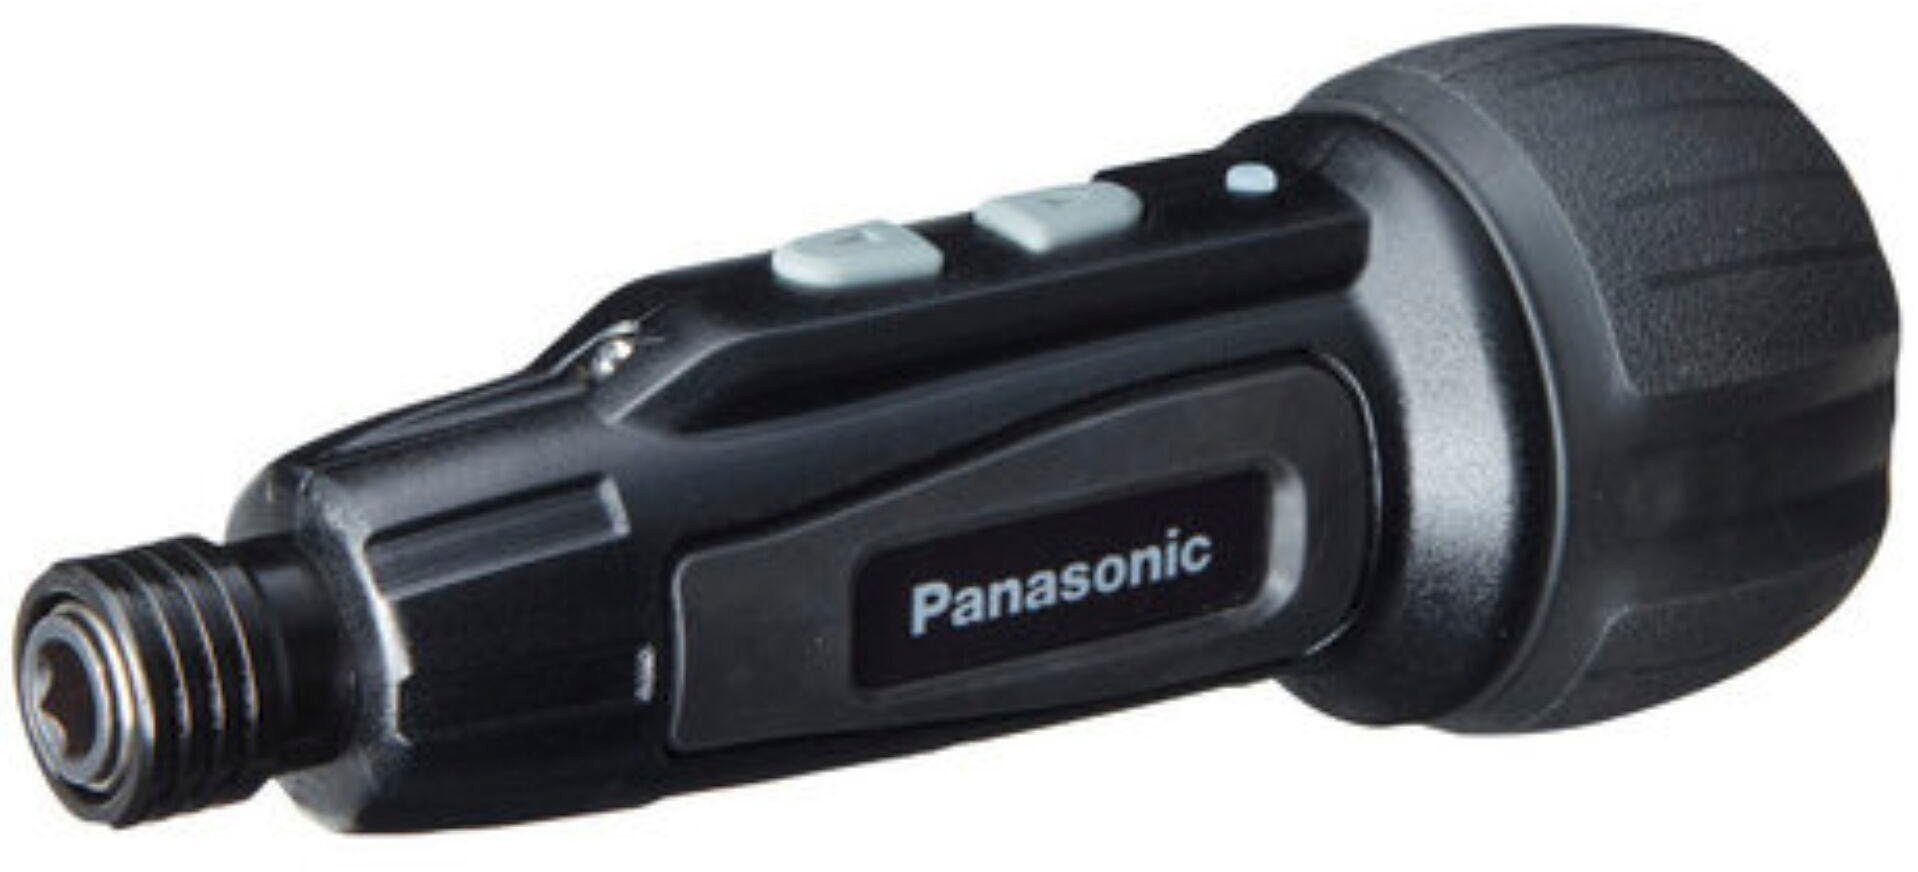 Panasonic Akku-Schraubendreher EY 7412, Akku mit eingebautem